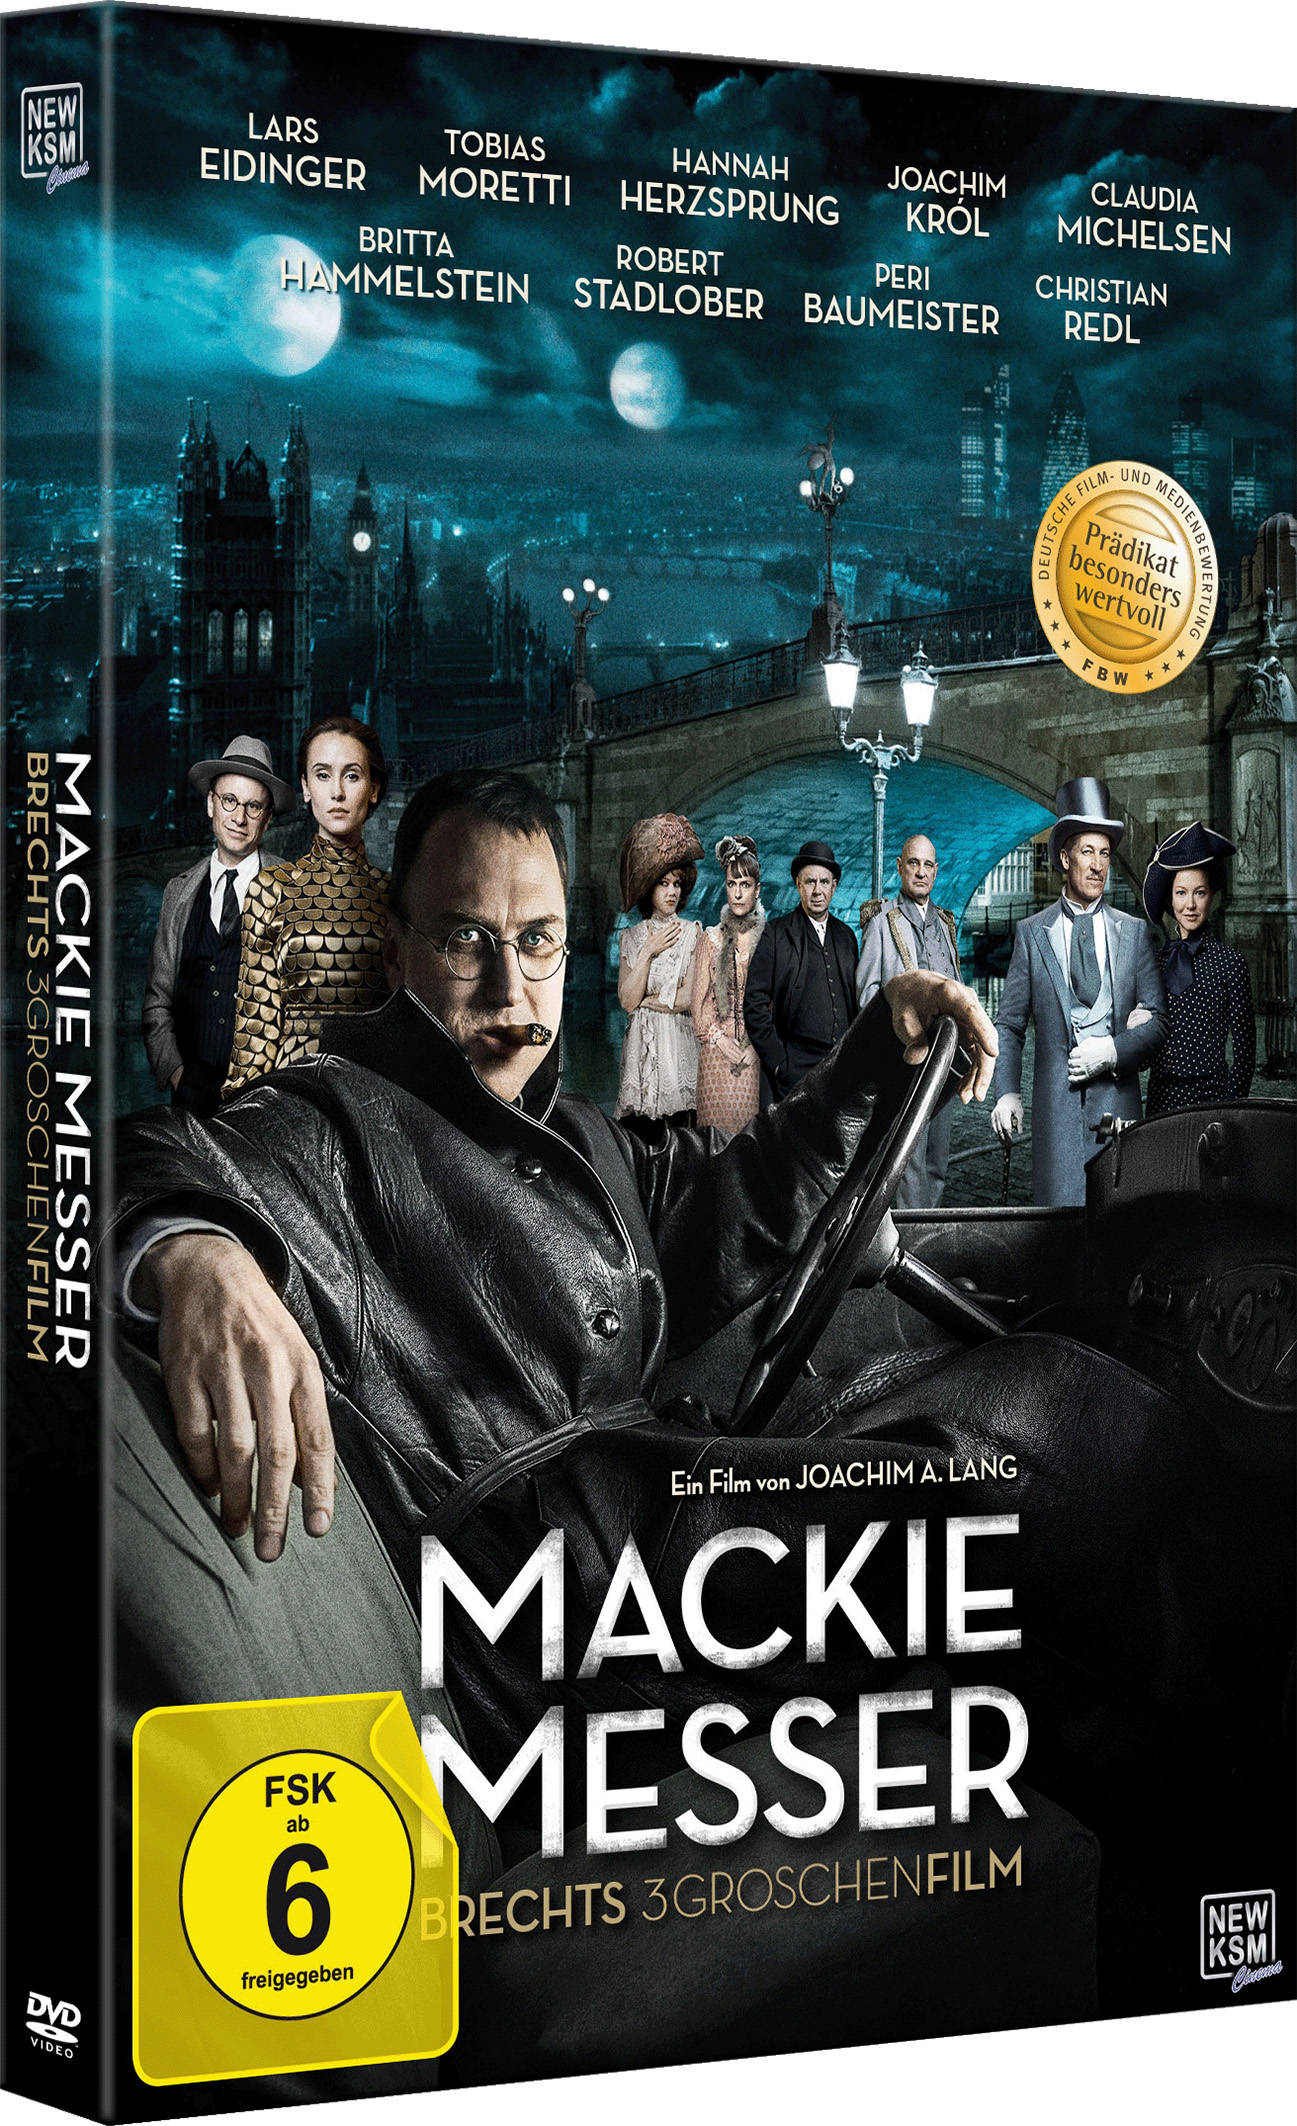 Mackie Messer (DVD) Image 2